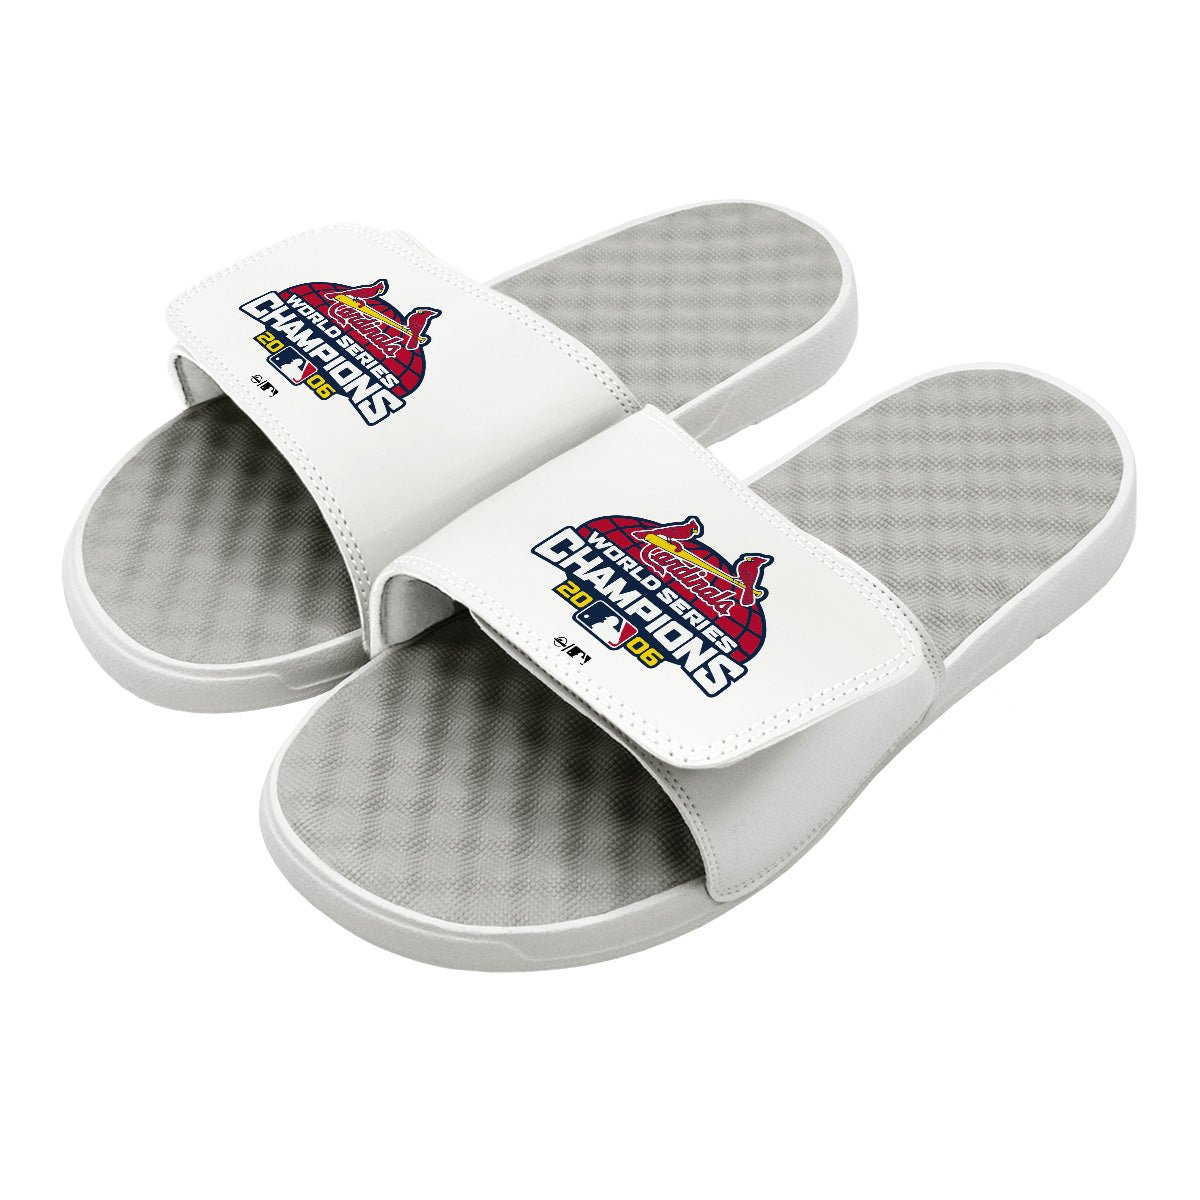 St. Louis Cardinals Flip Flops, Cardinals Sandals, Slides